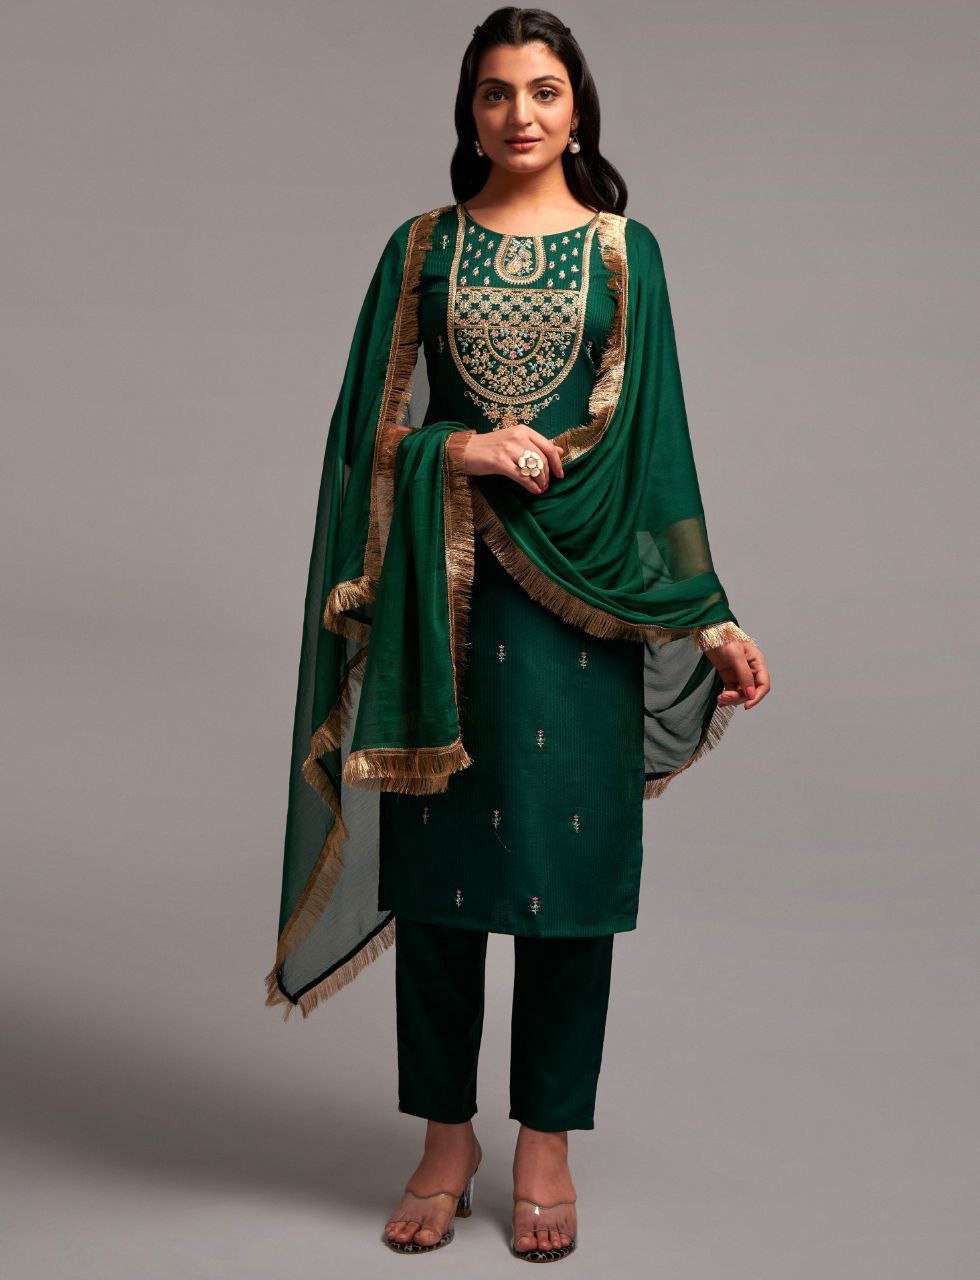 Green Salwar Suit in Rayon with Diamond Work